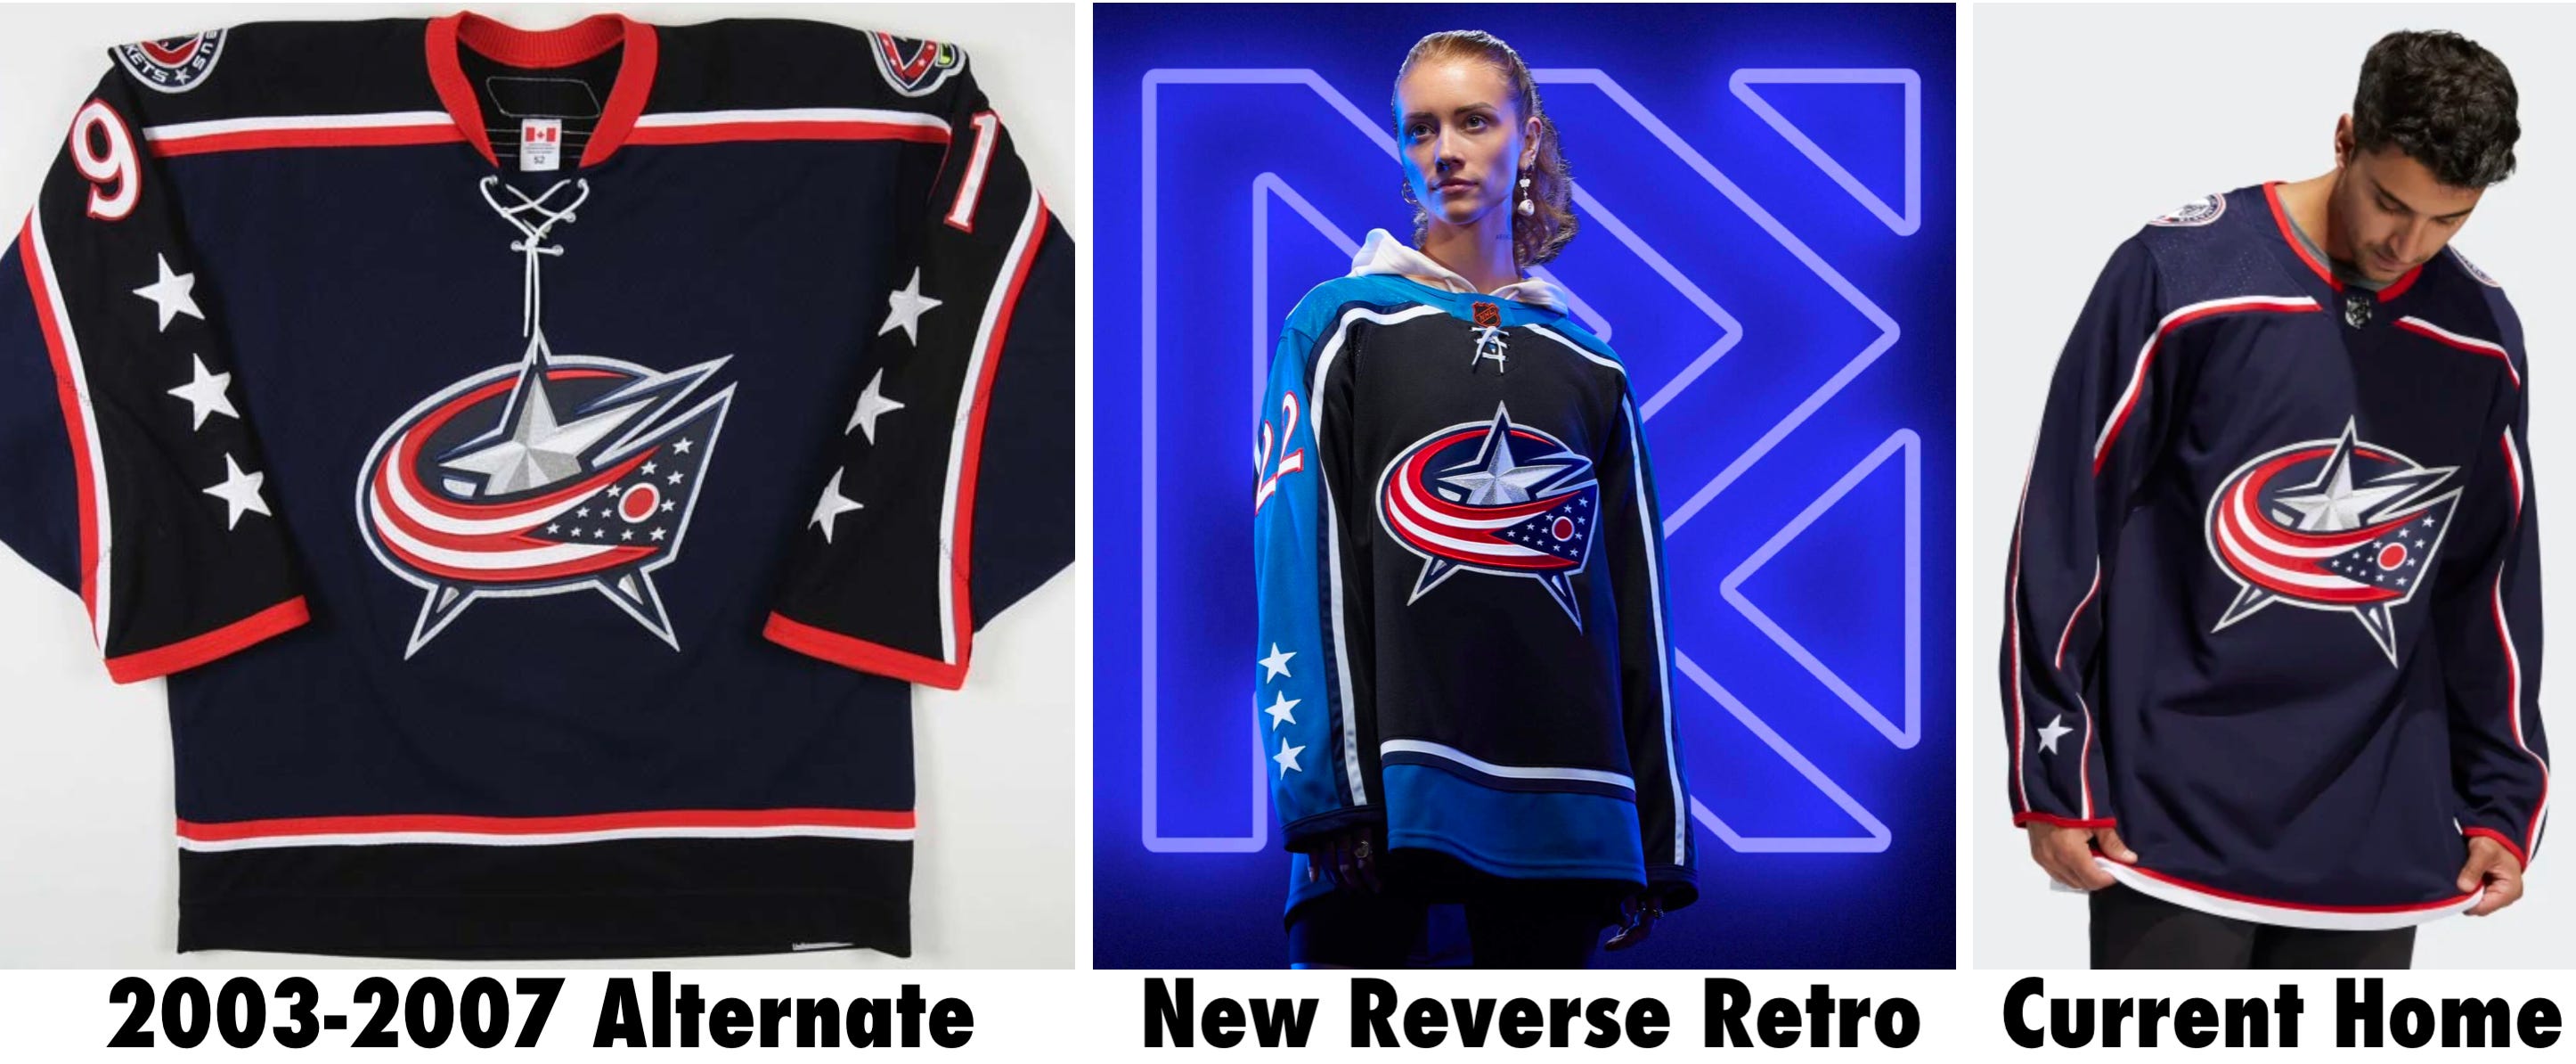 Columbus Blue Jackets unveil new Reverse Retro jersey